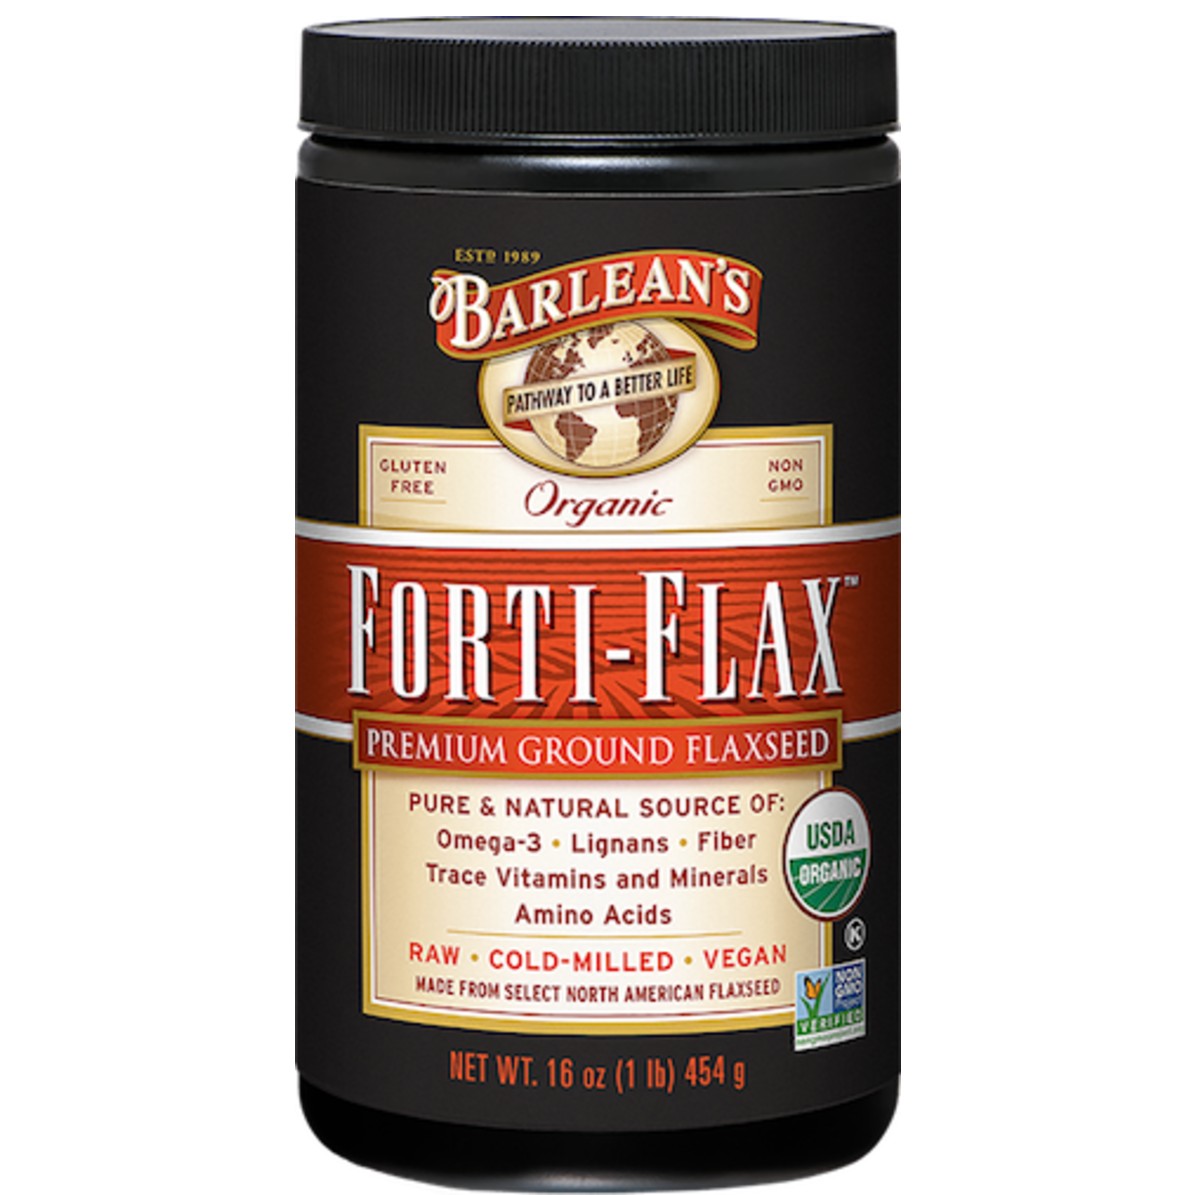 Organic Forti-Flax Flax-Seed - Barleans